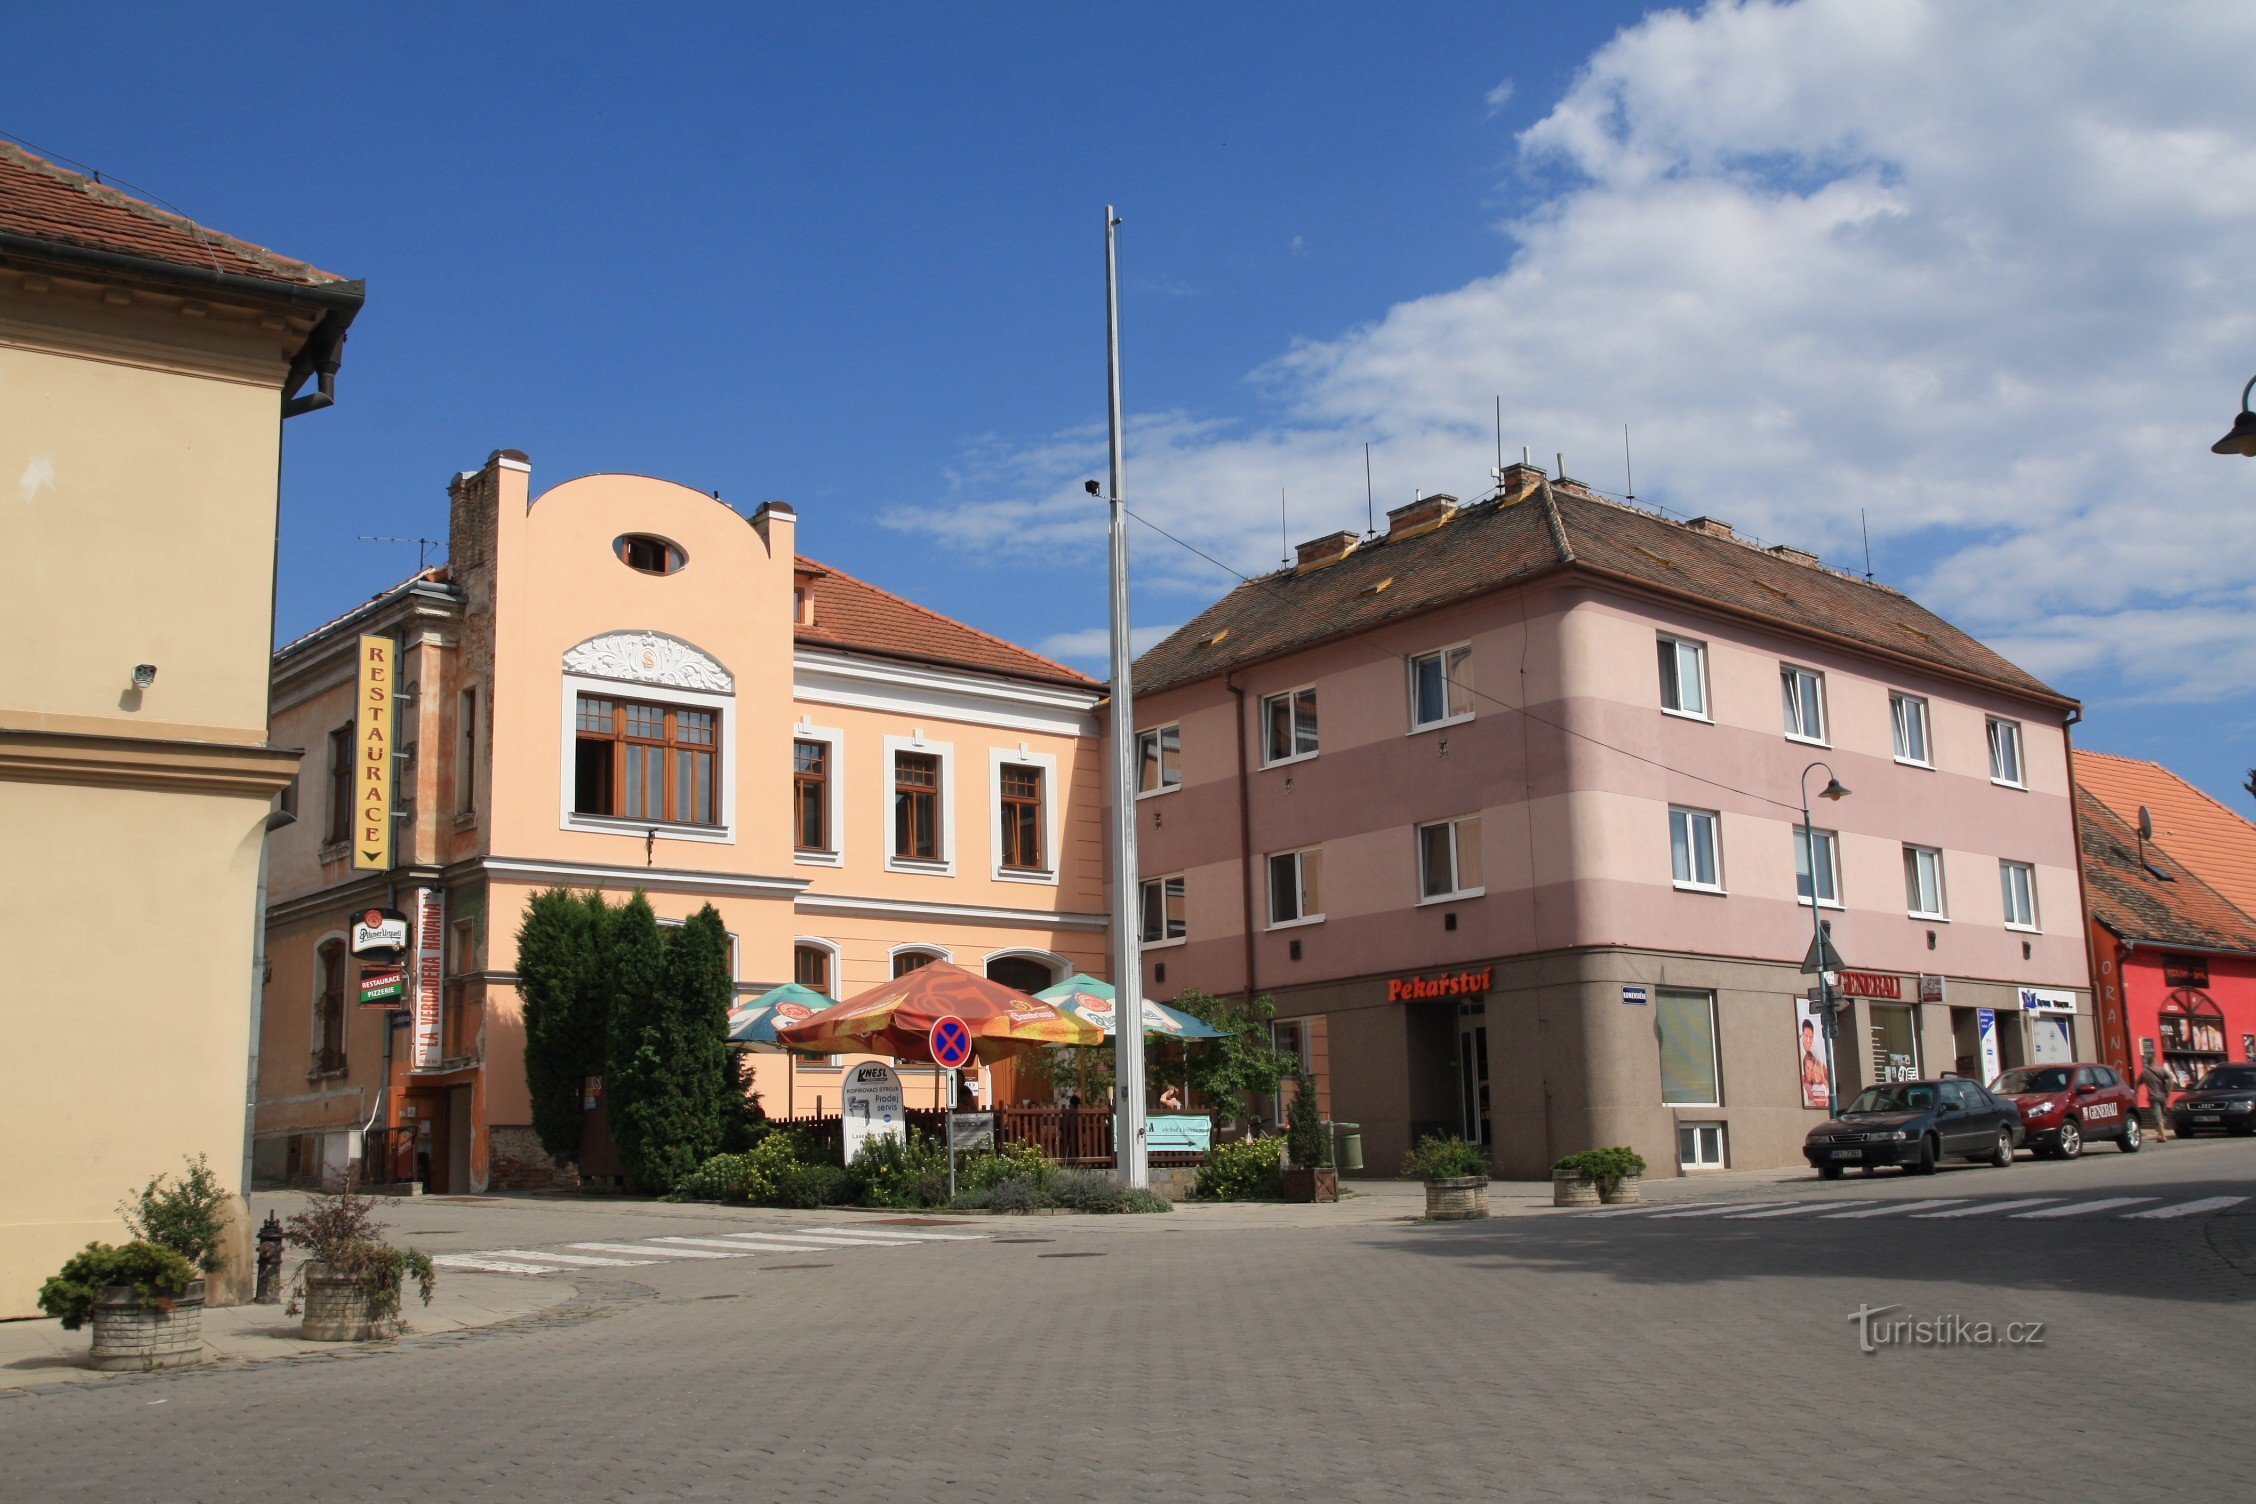 Plaza de la Paz de Židlochovice